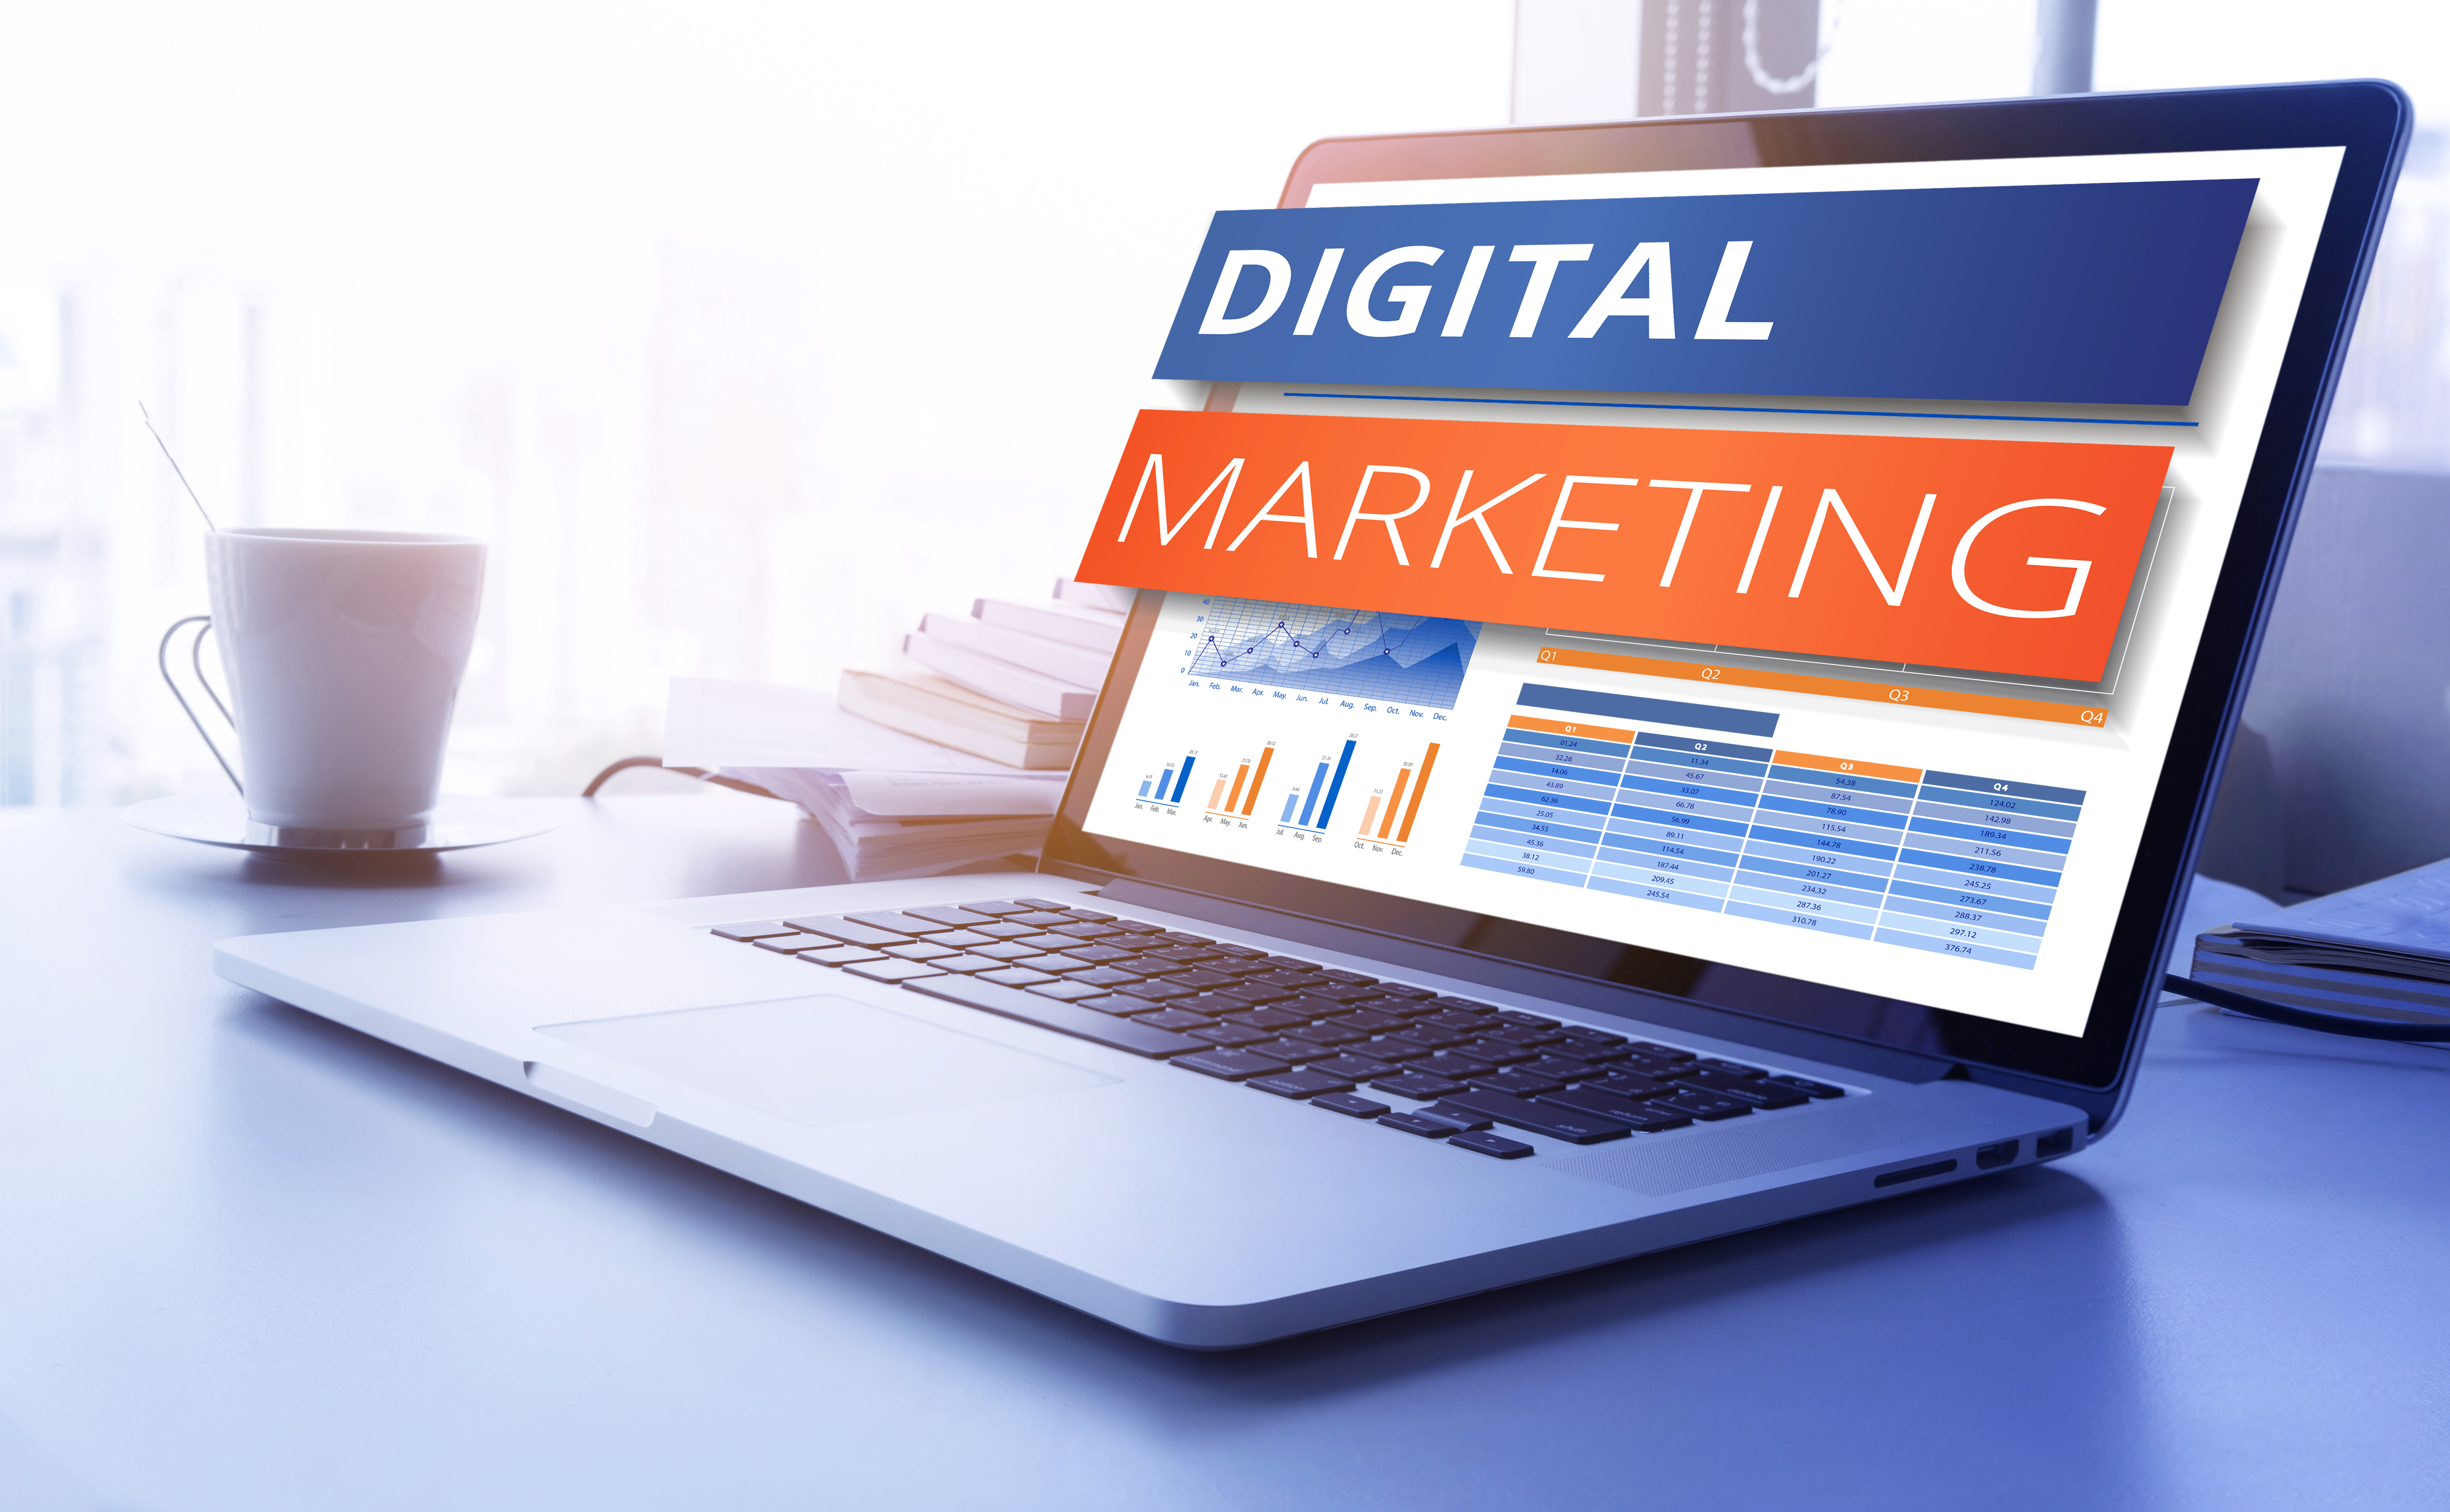 In the digital era, Digital Marketing will be a money-making career